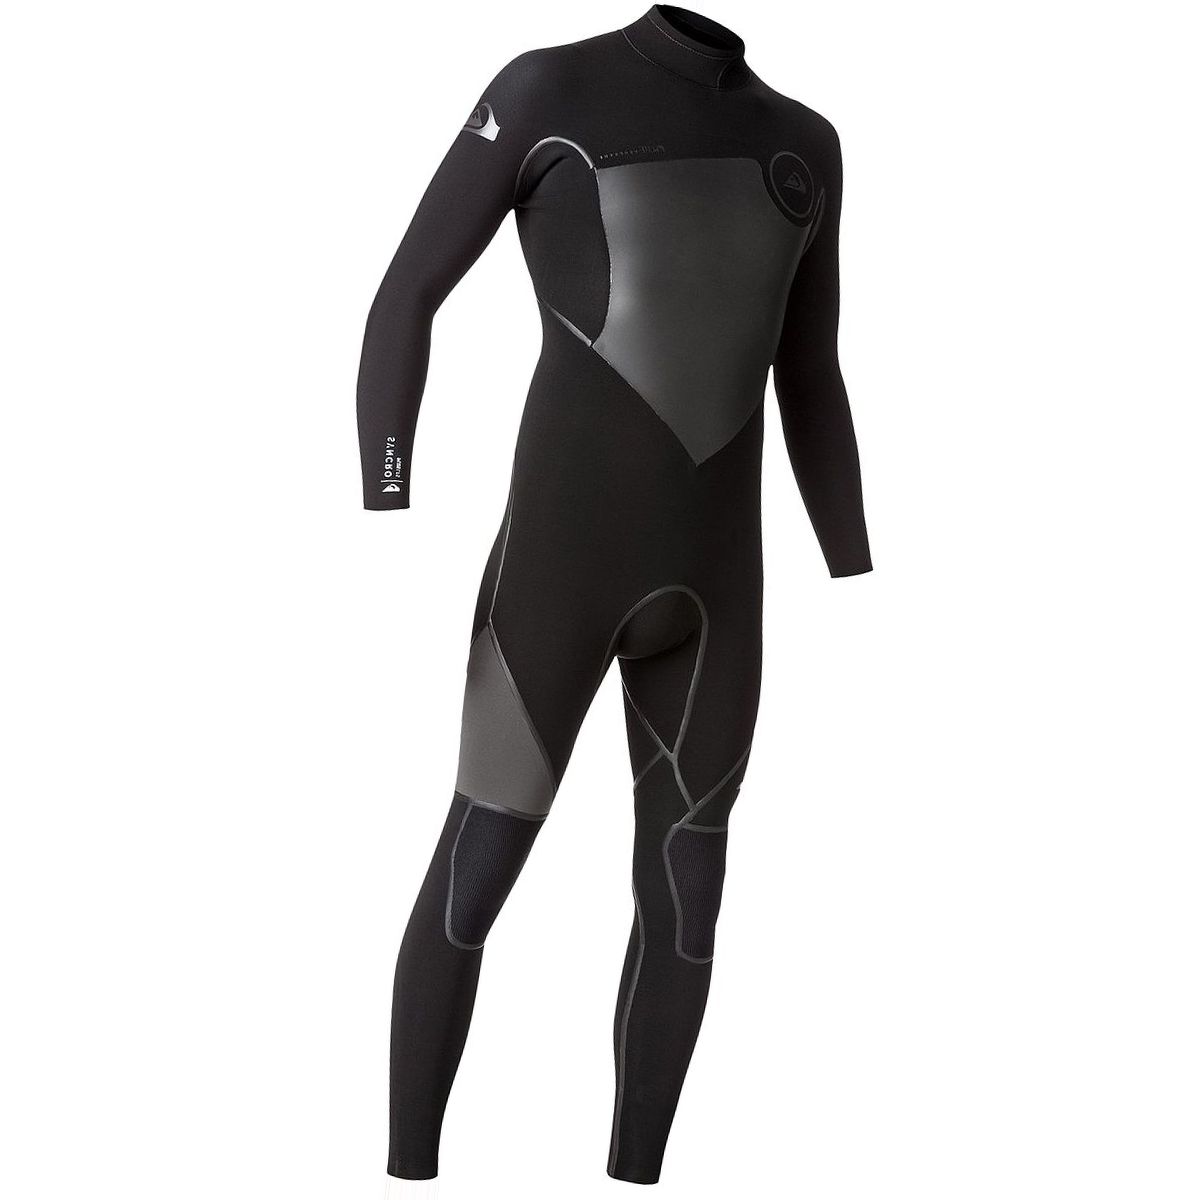 Quiksilver 3/2 Syncro Plus Back-Zip LFS Wetsuit - Men's